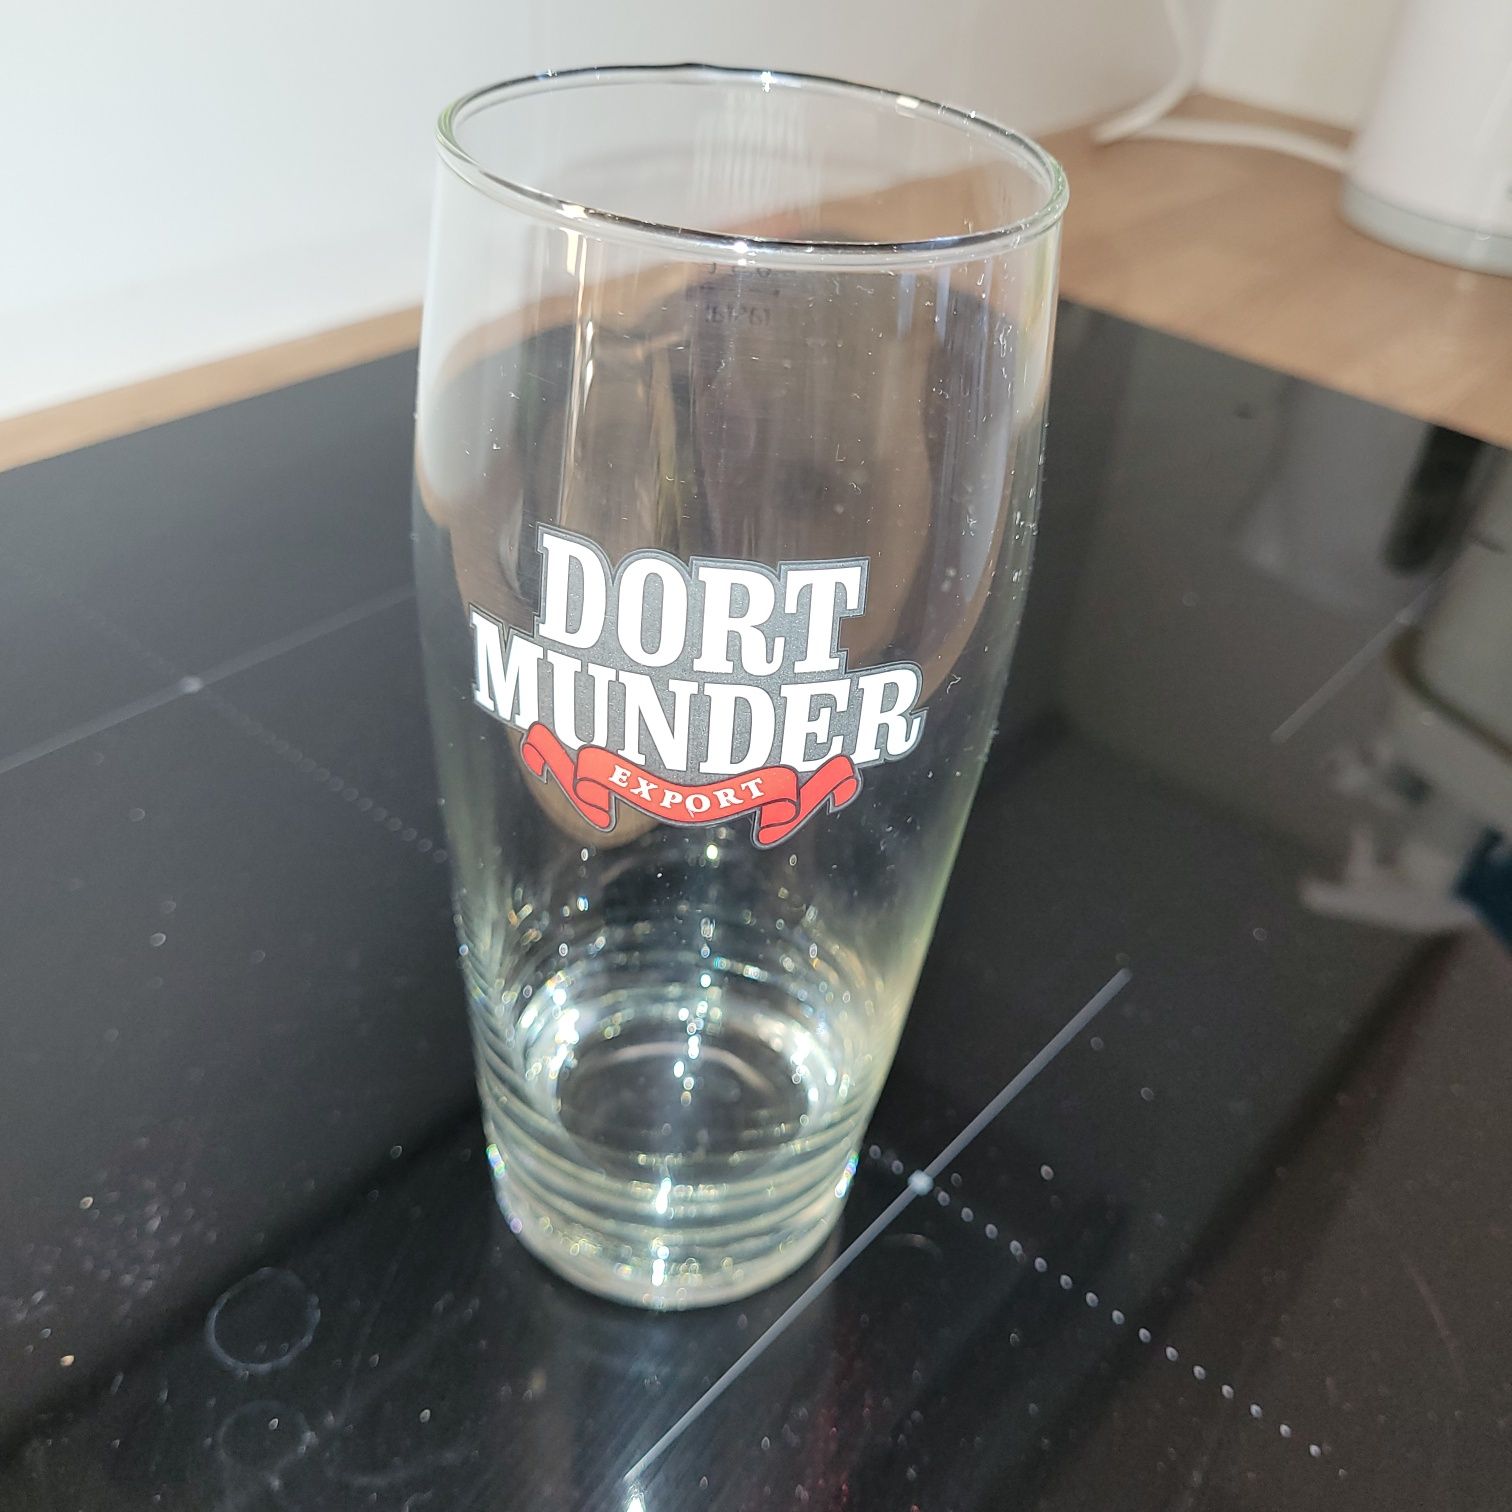 Szklanka do piwa Dort Munder export